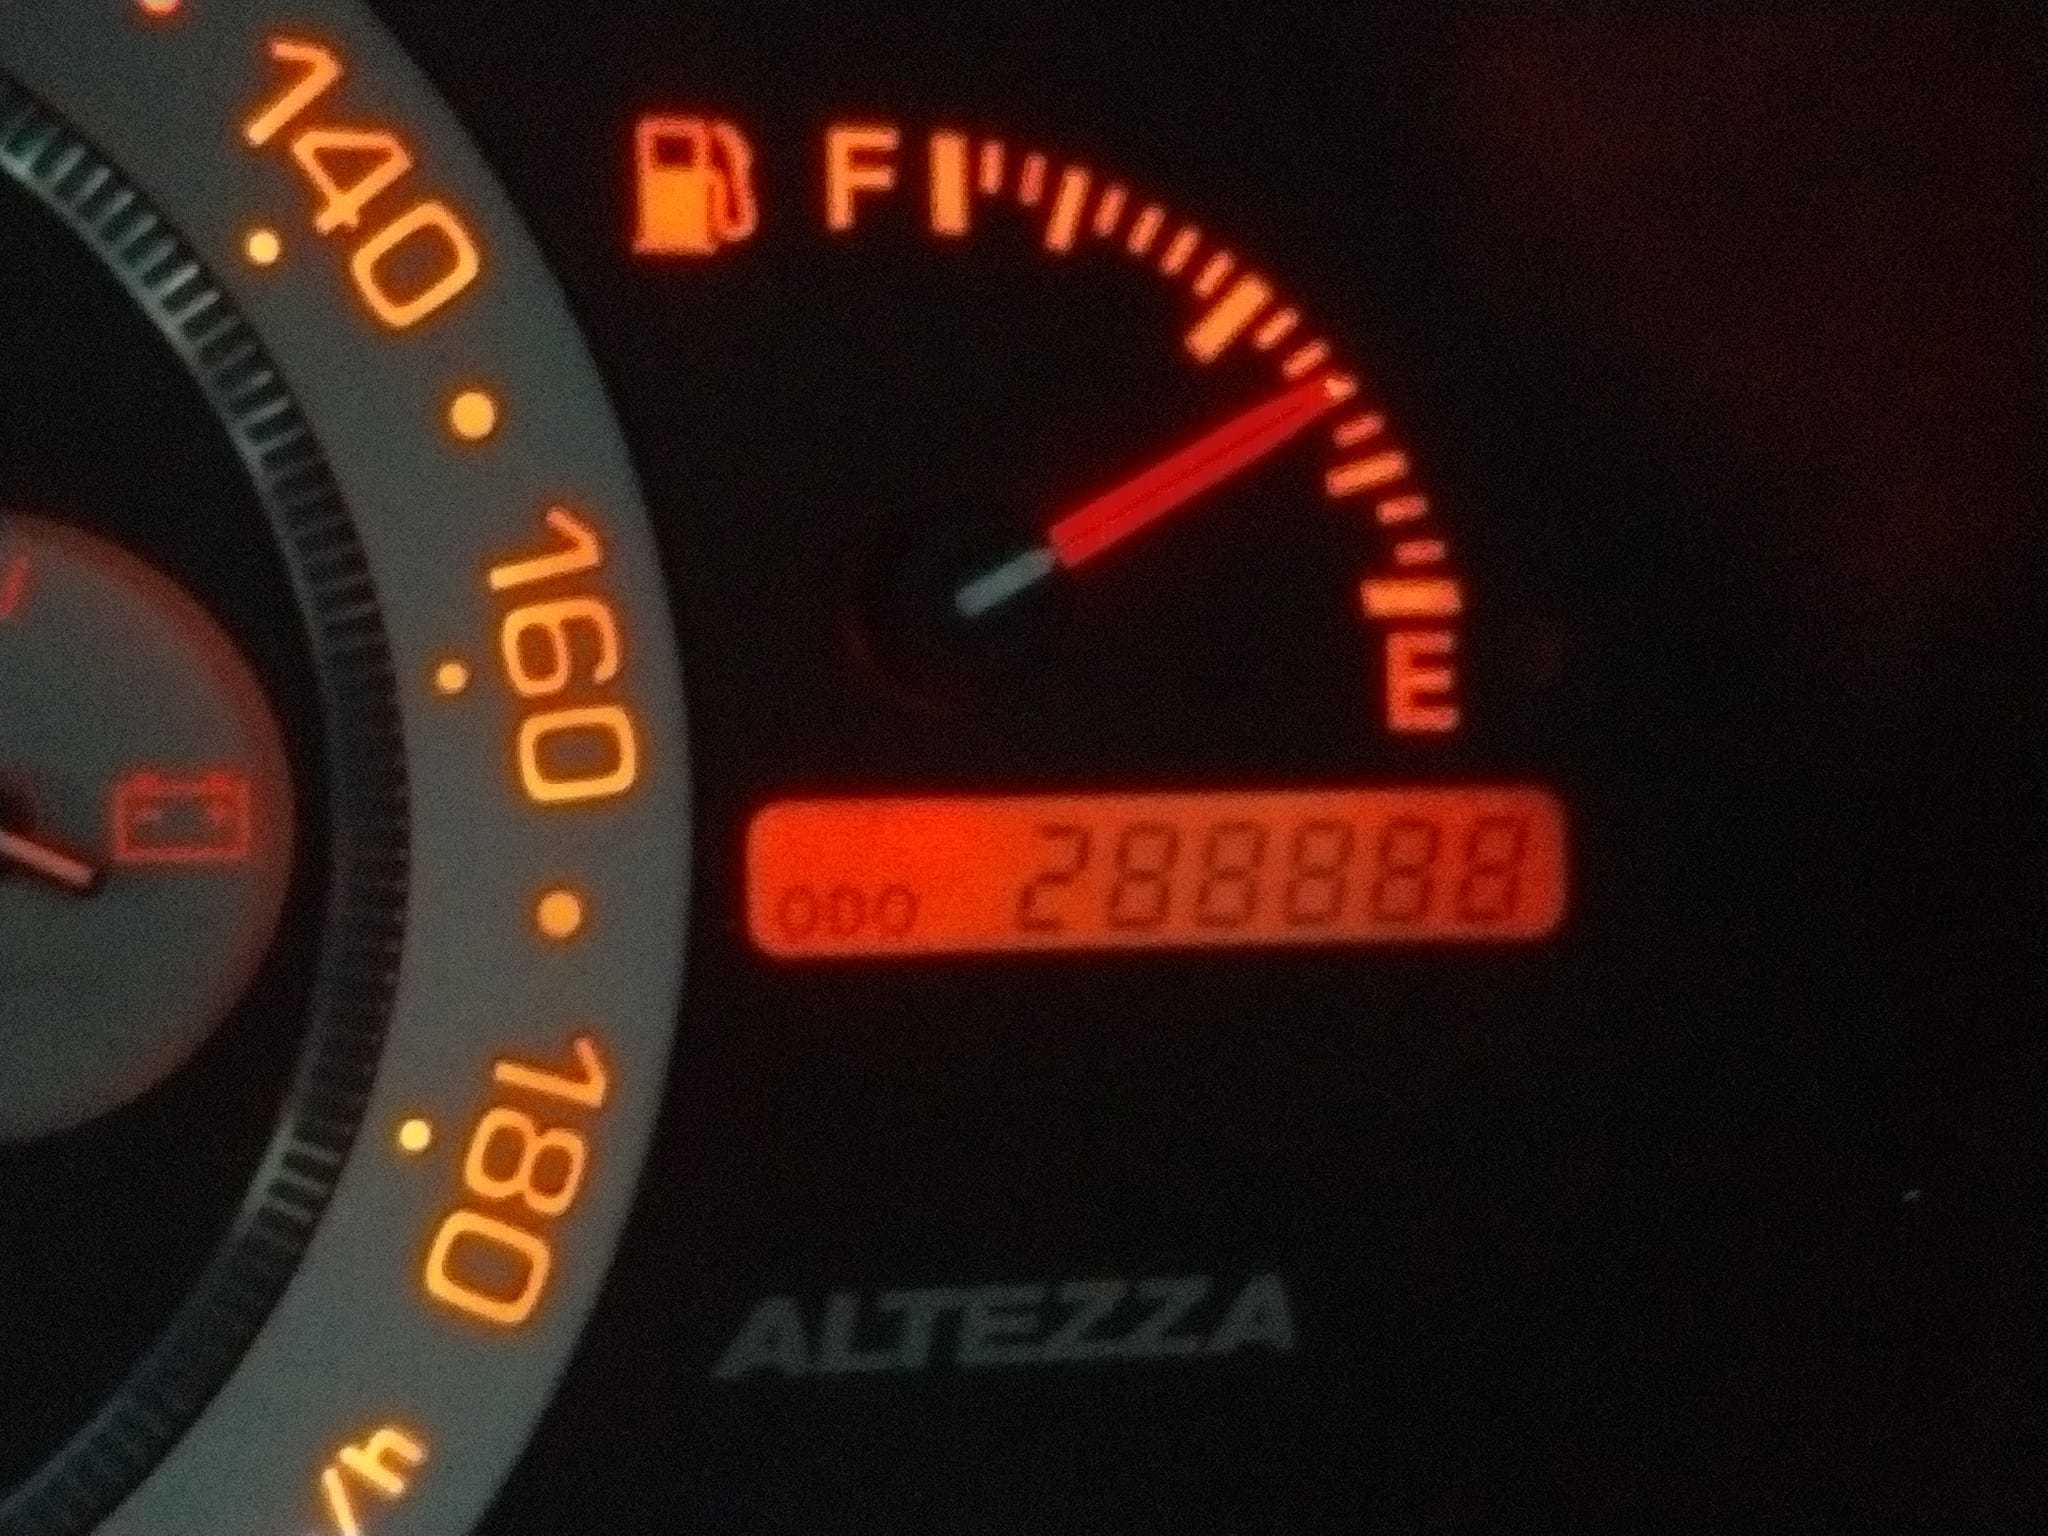 2,888,888km